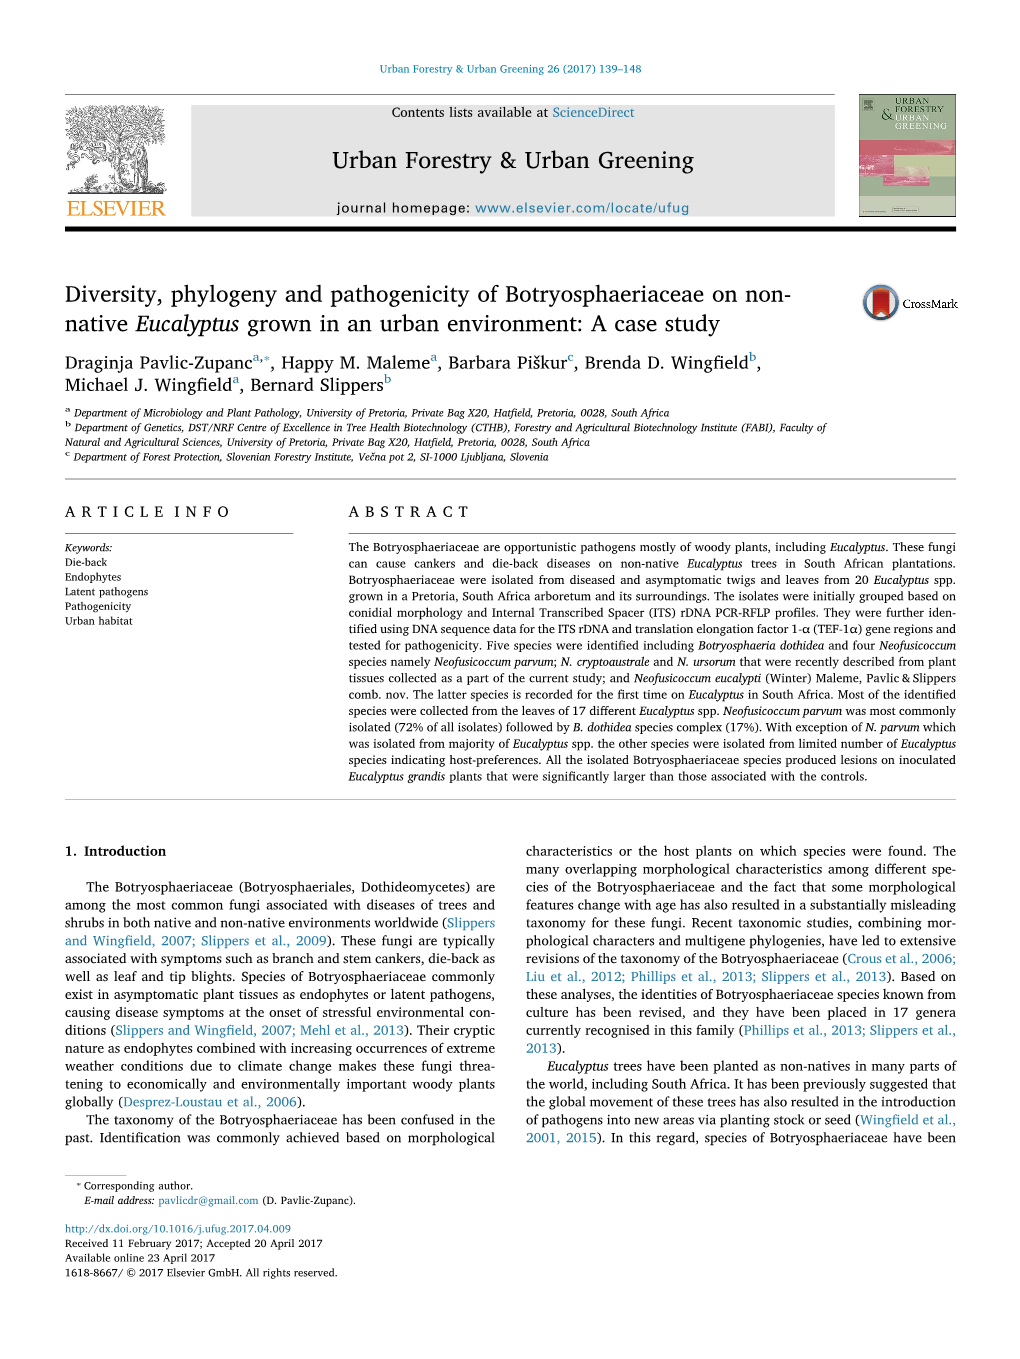 Diversity, Phylogeny and Pathogenicity Of